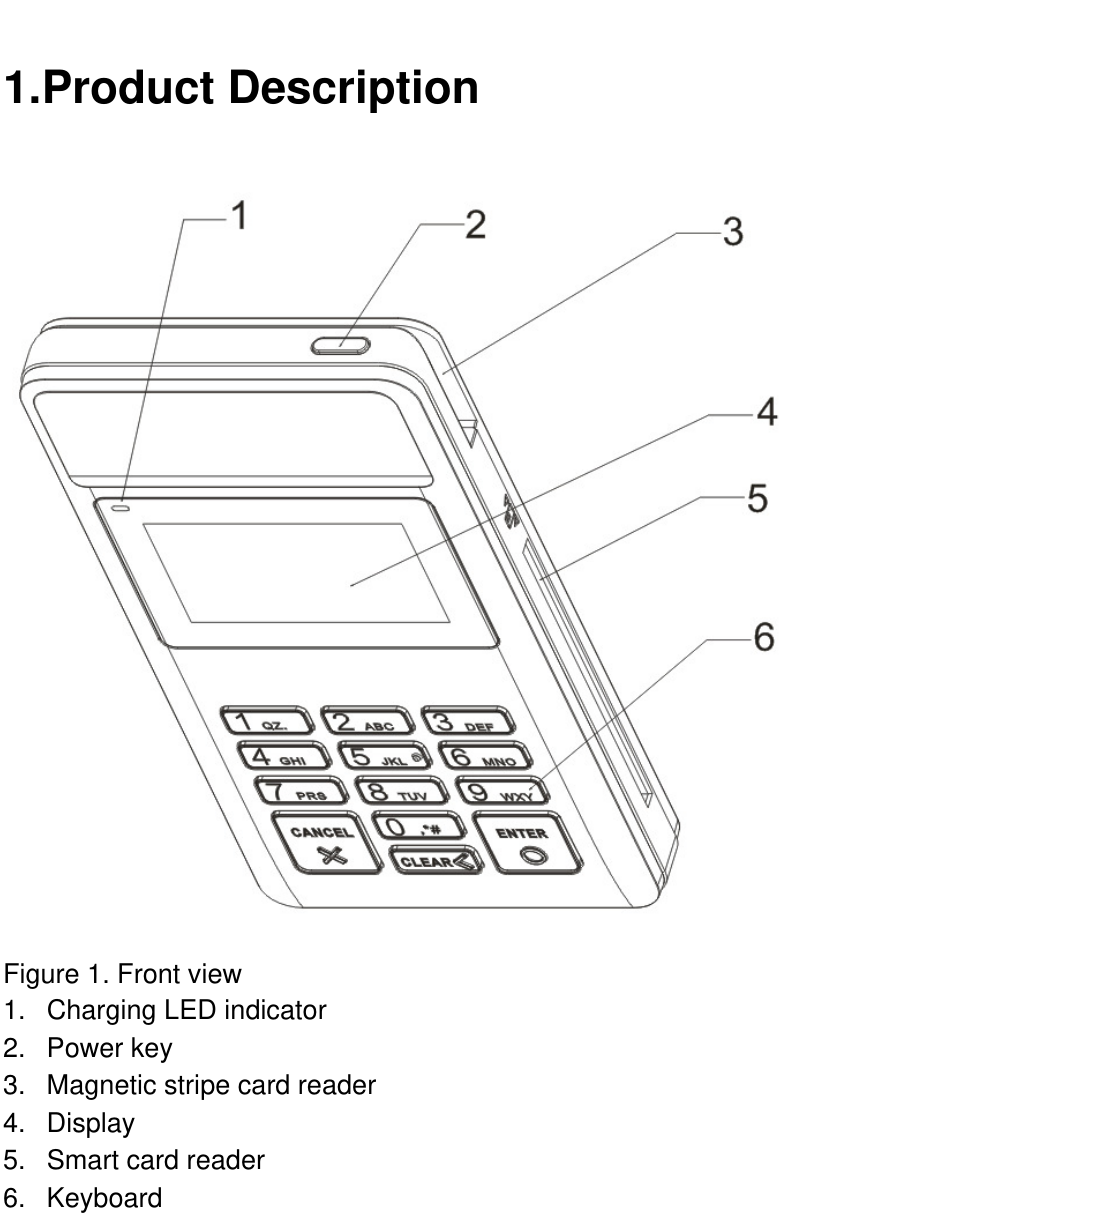  1. Product Description  Figure 1. Front view 1. Charging LED indicator 2. Power key 3. Magnetic stripe card reader 4. Display 5.  Smart card reader 6. Keyboard  